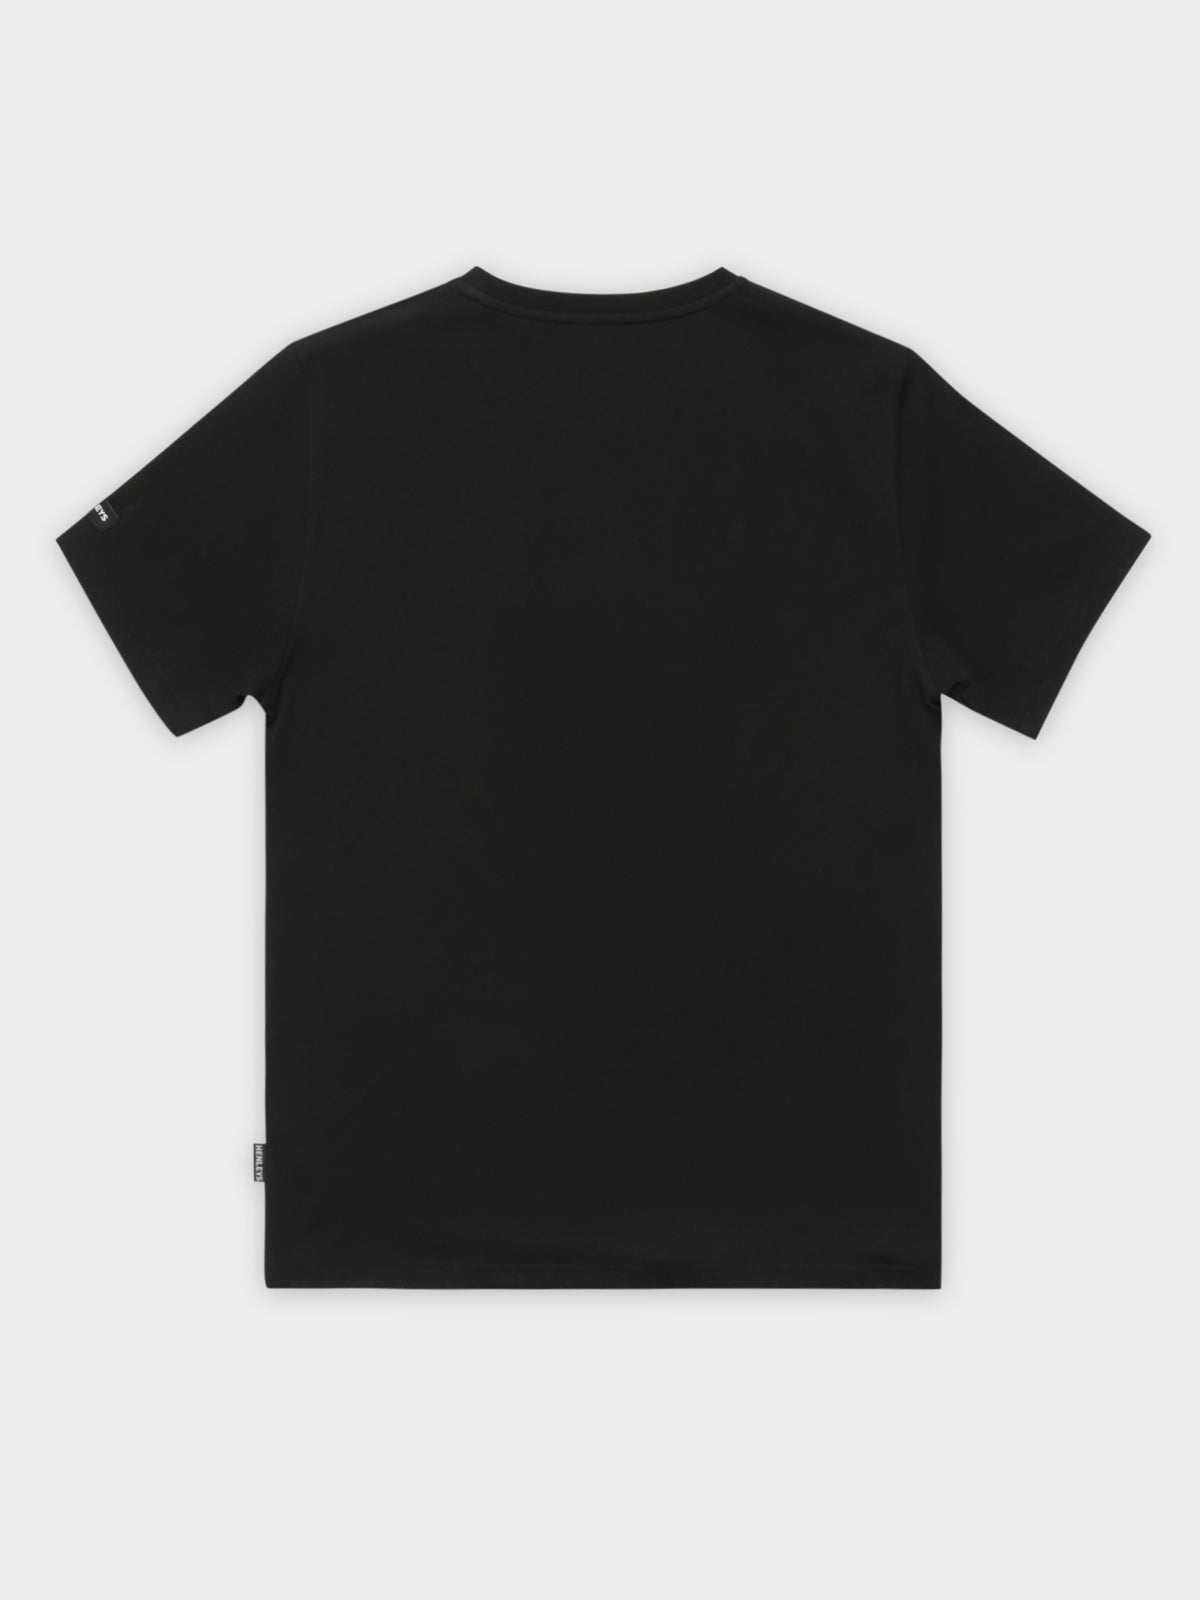 Carter T-Shirt in Black